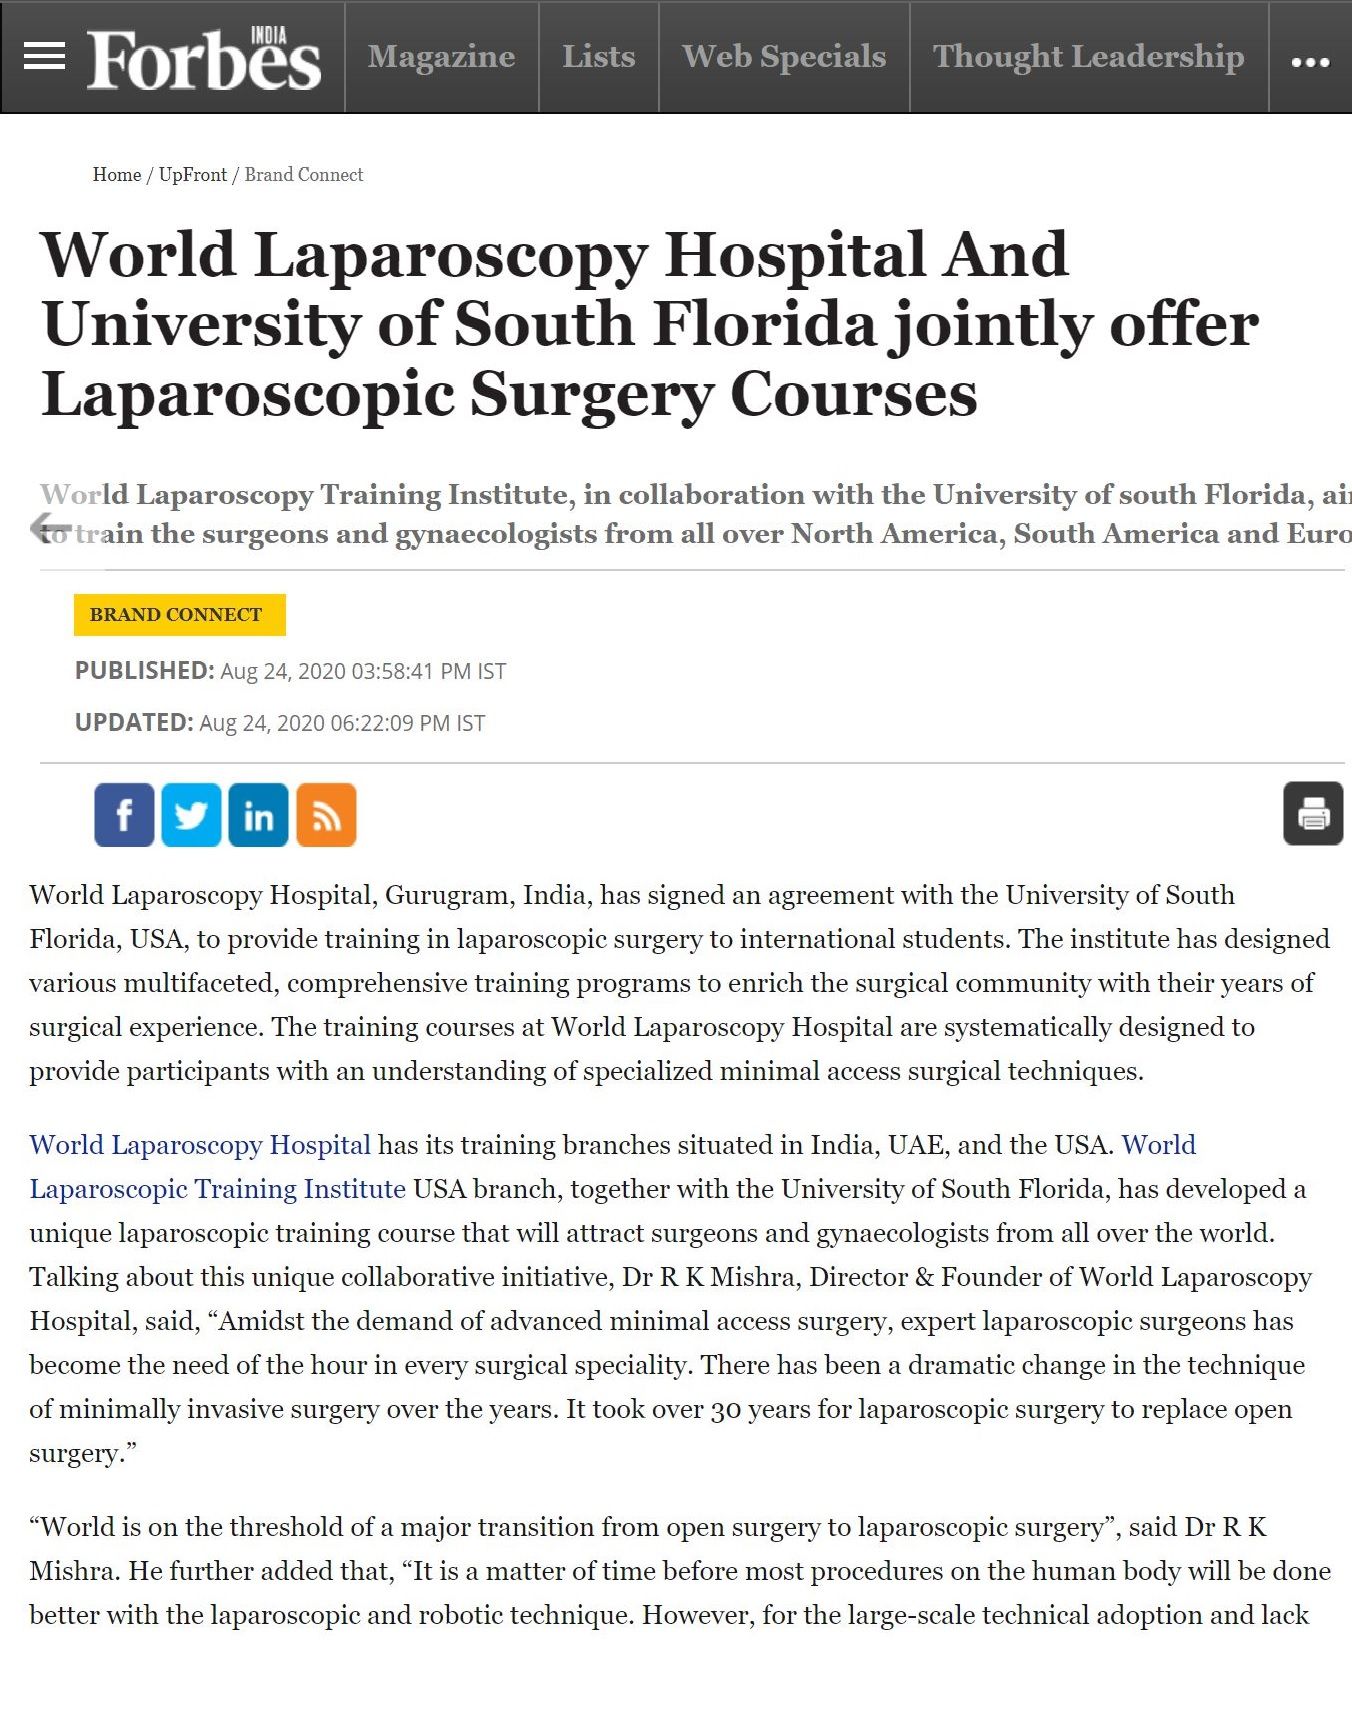 World Laparoscopy Hospital And University of South Florida jointly offer Laparoscopic Surgery Courses